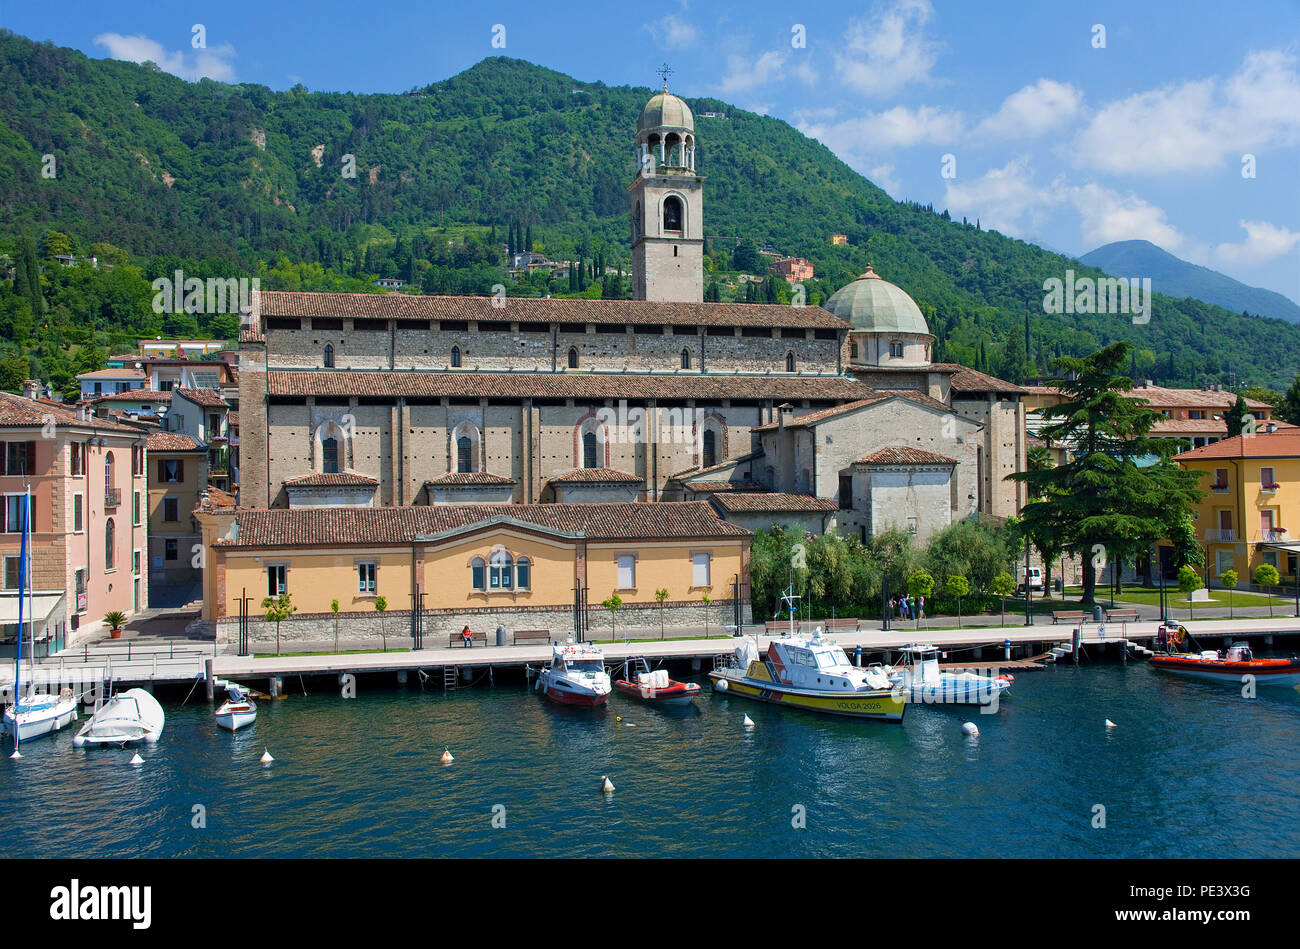 Cathedral Santa Maria Annunziata at the town Salò, province Brescia, Lake Garda, Lombardy, Italy Stock Photo